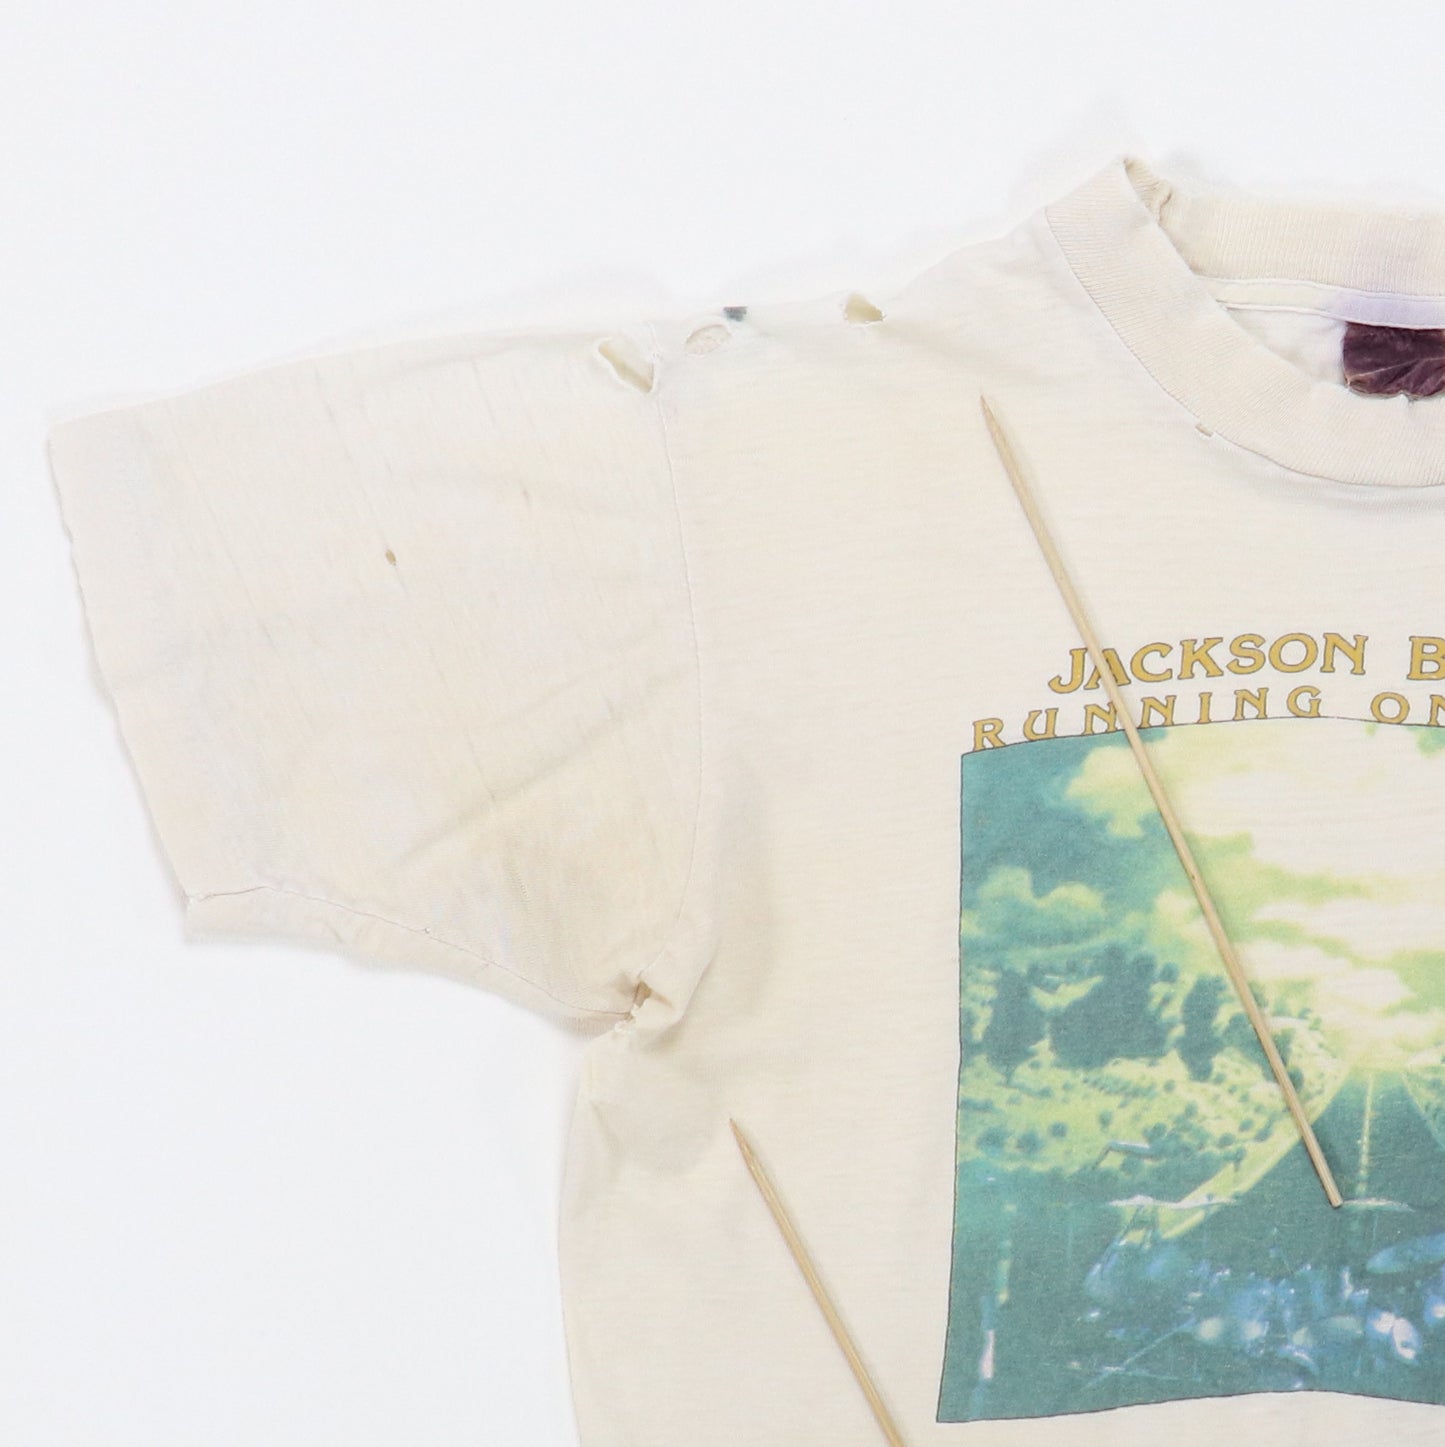 1977 Jackson Browne Running On Empty No Nukes Shirt